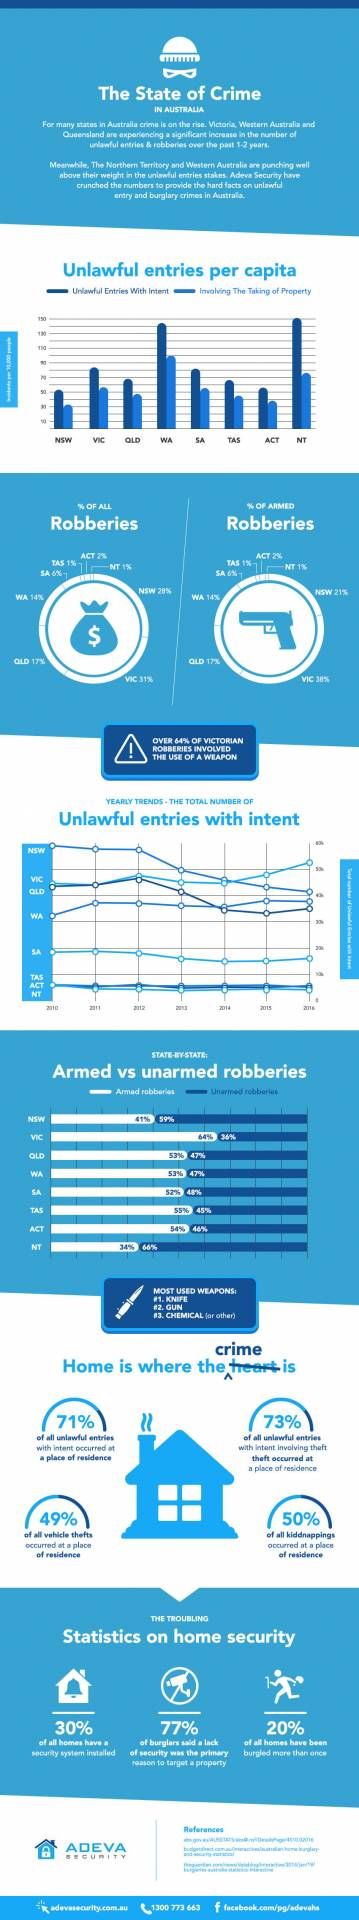 crime capitals infographic